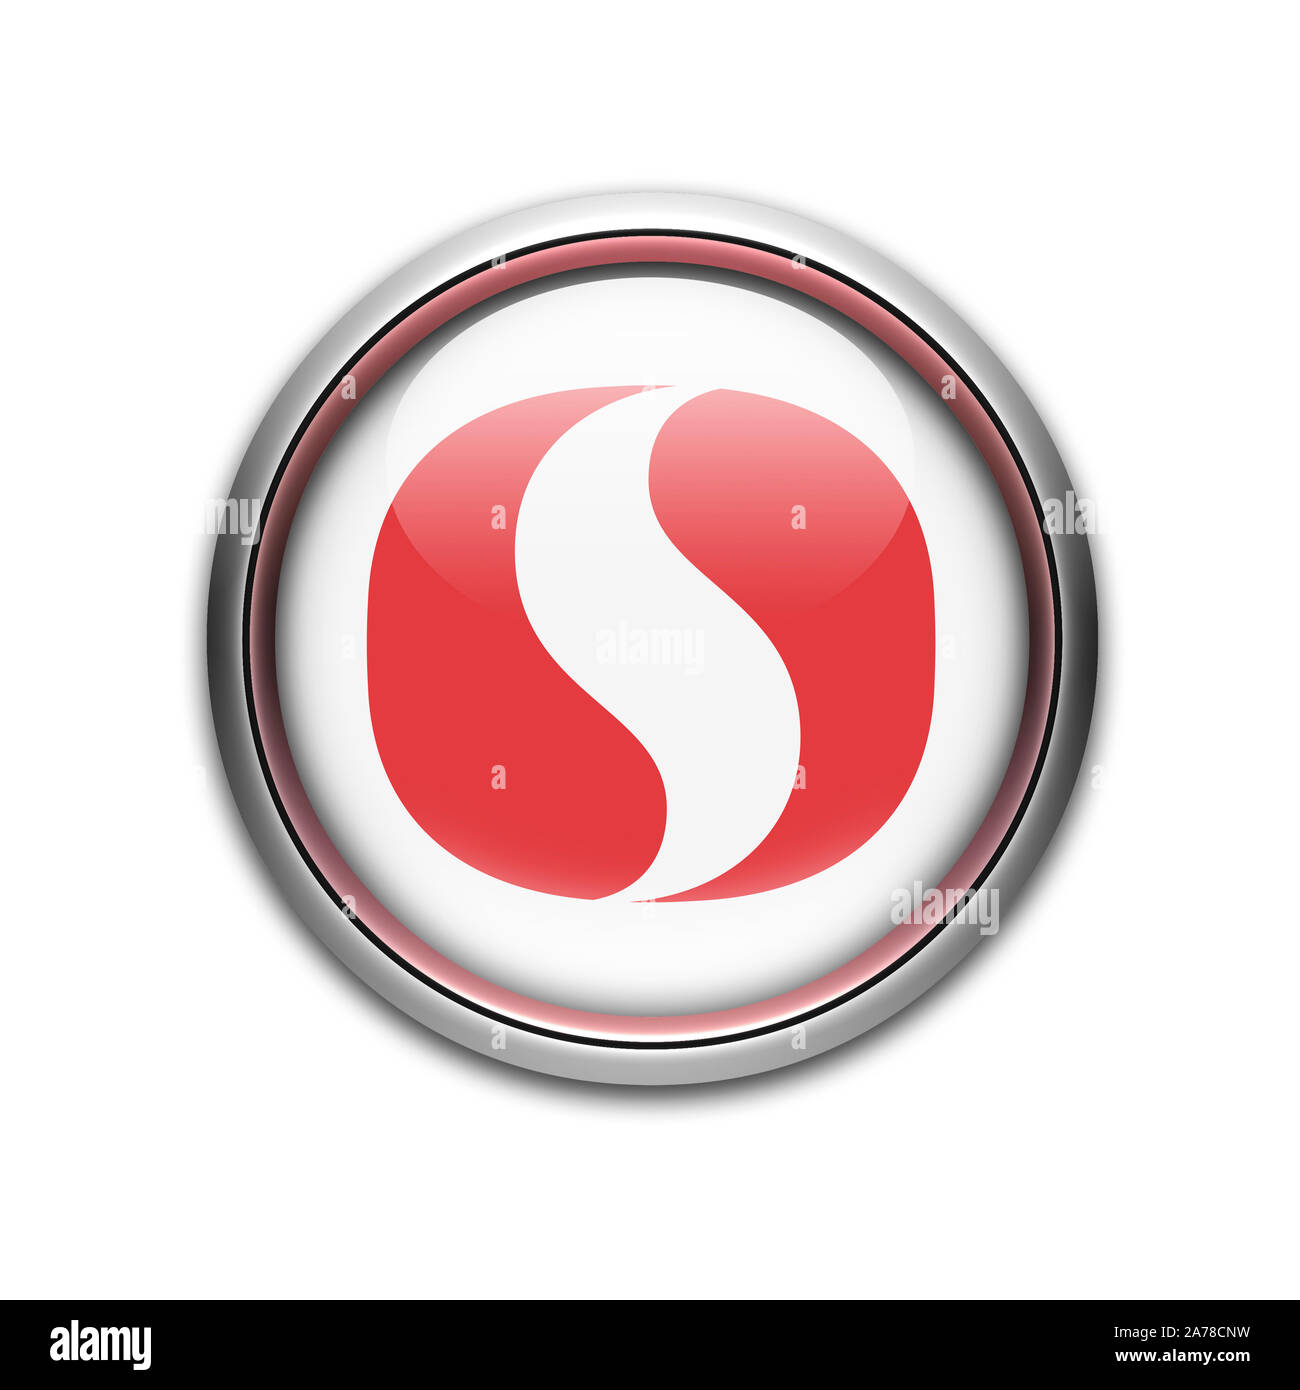 Safeway logo Stock Photo